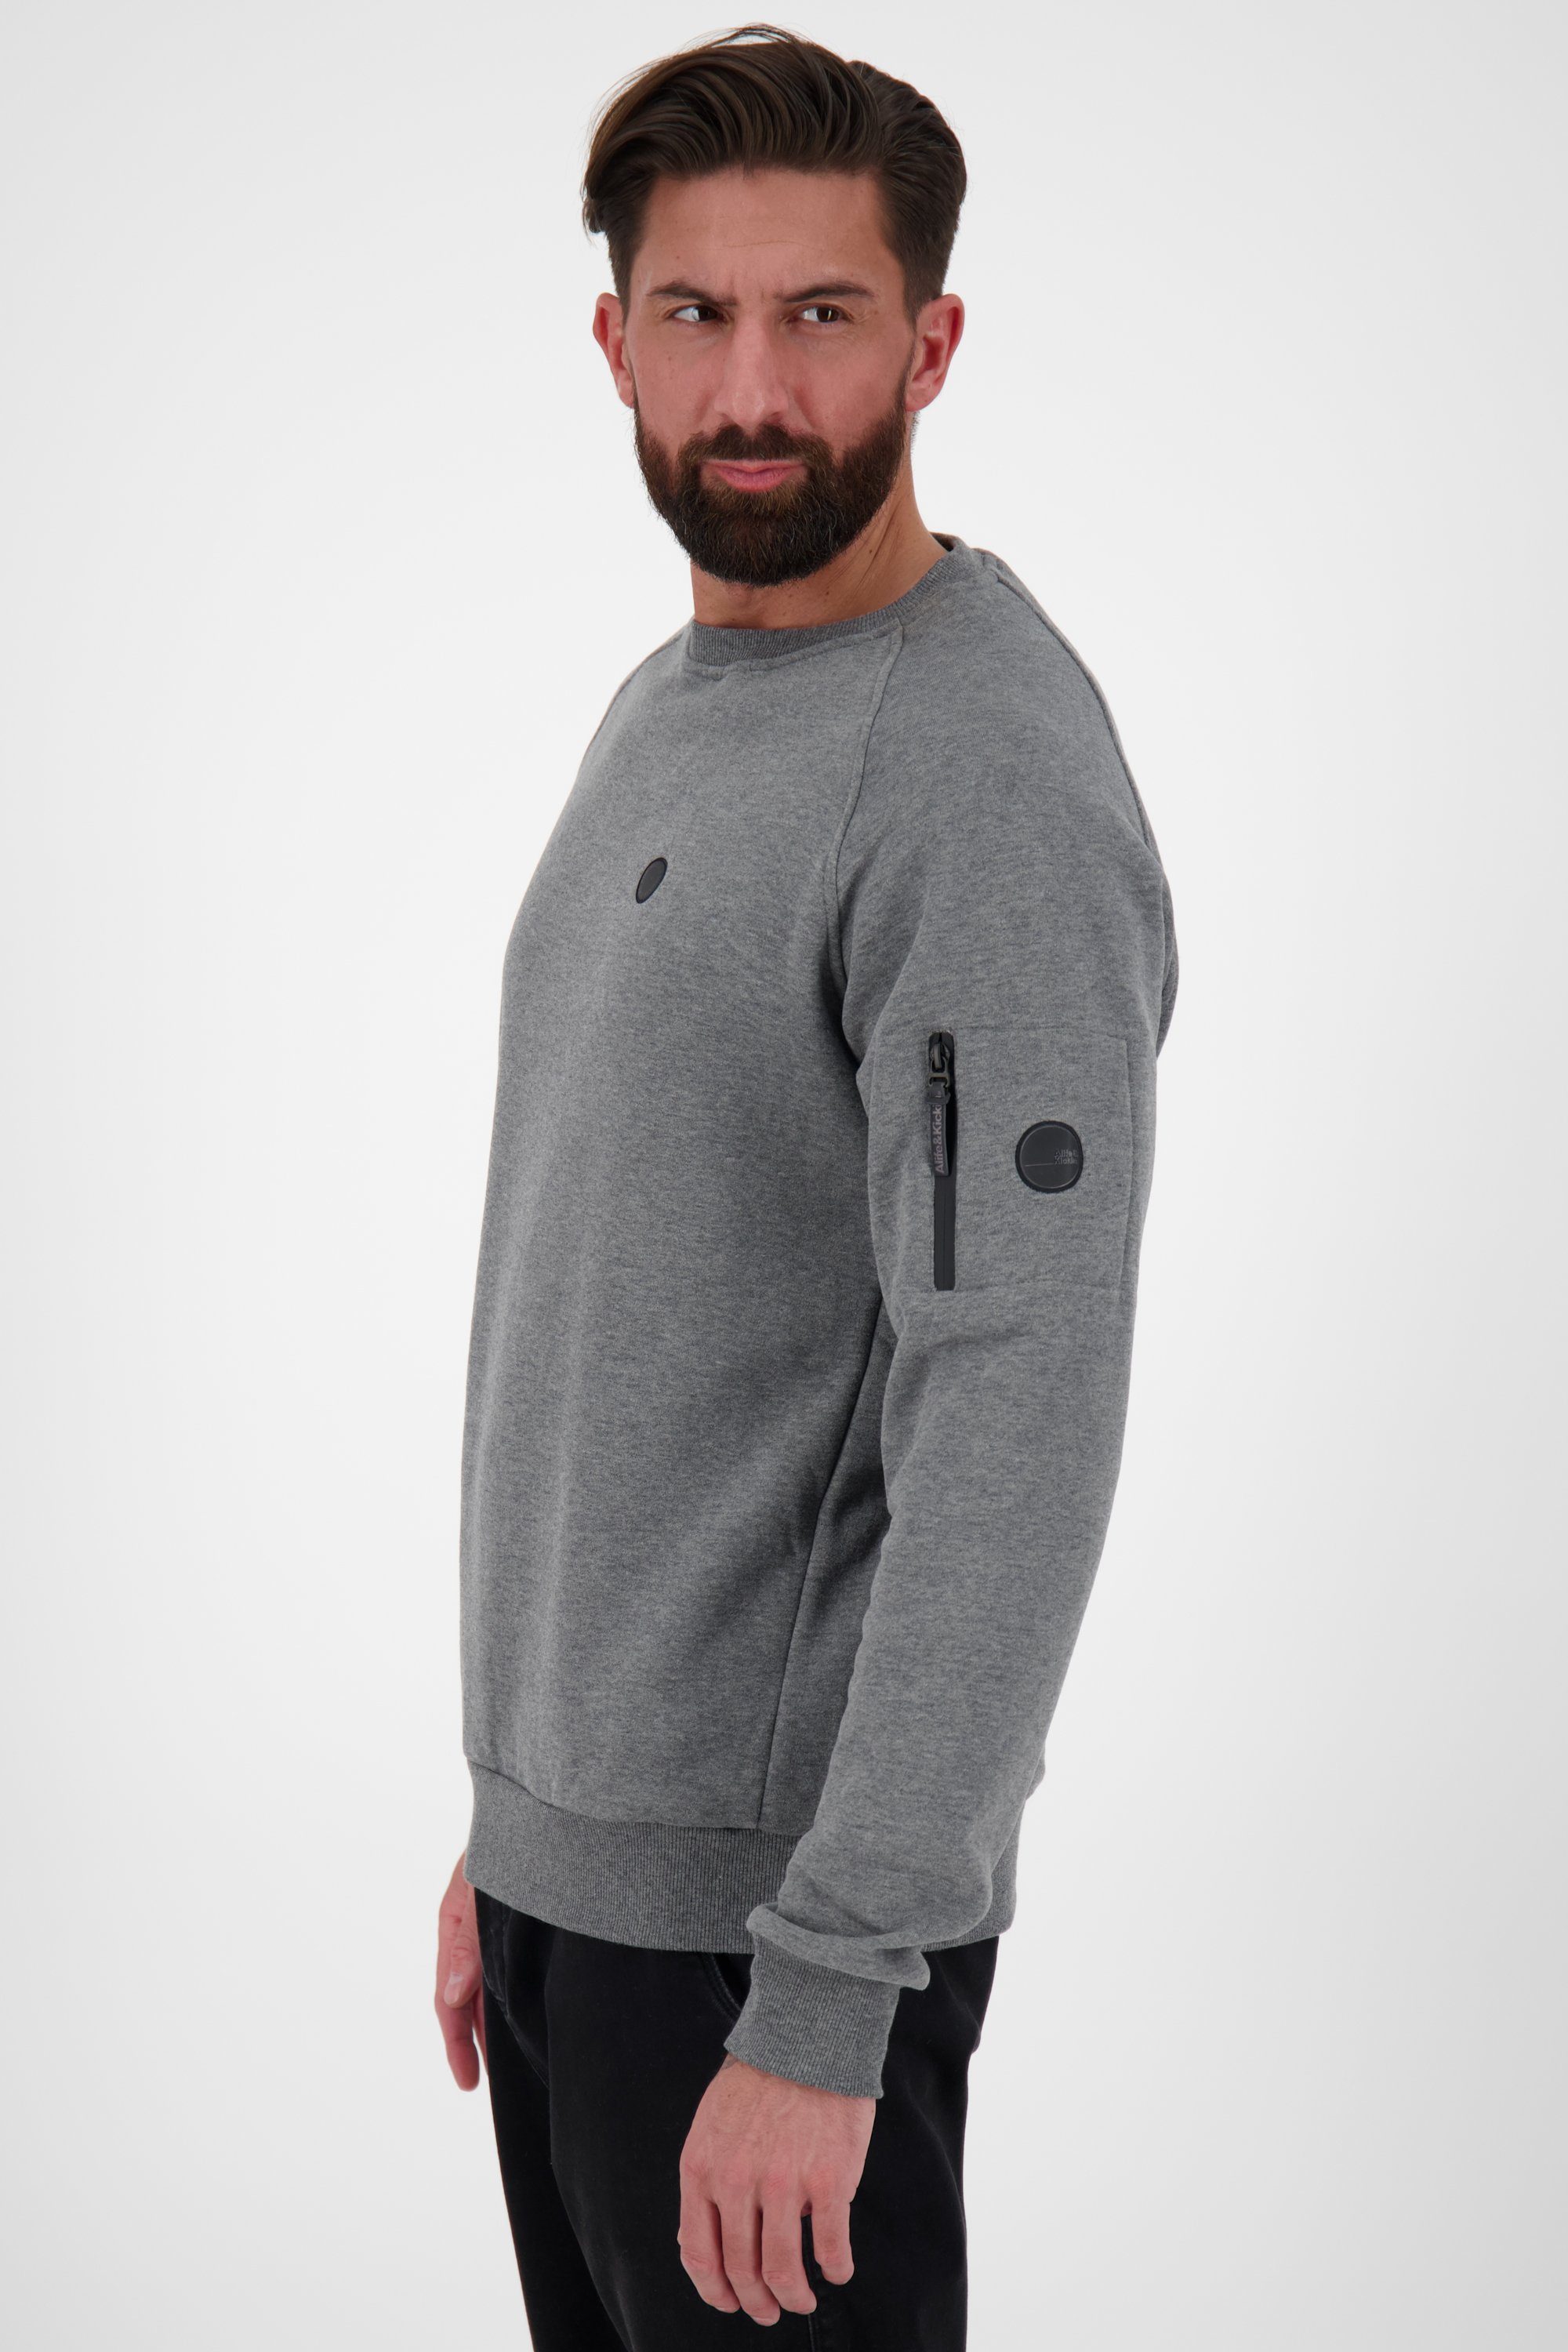 Alife steal Herren melange Kickin & Crewneck VinnAK Pullover Sweatshirt, A Sweatshirt